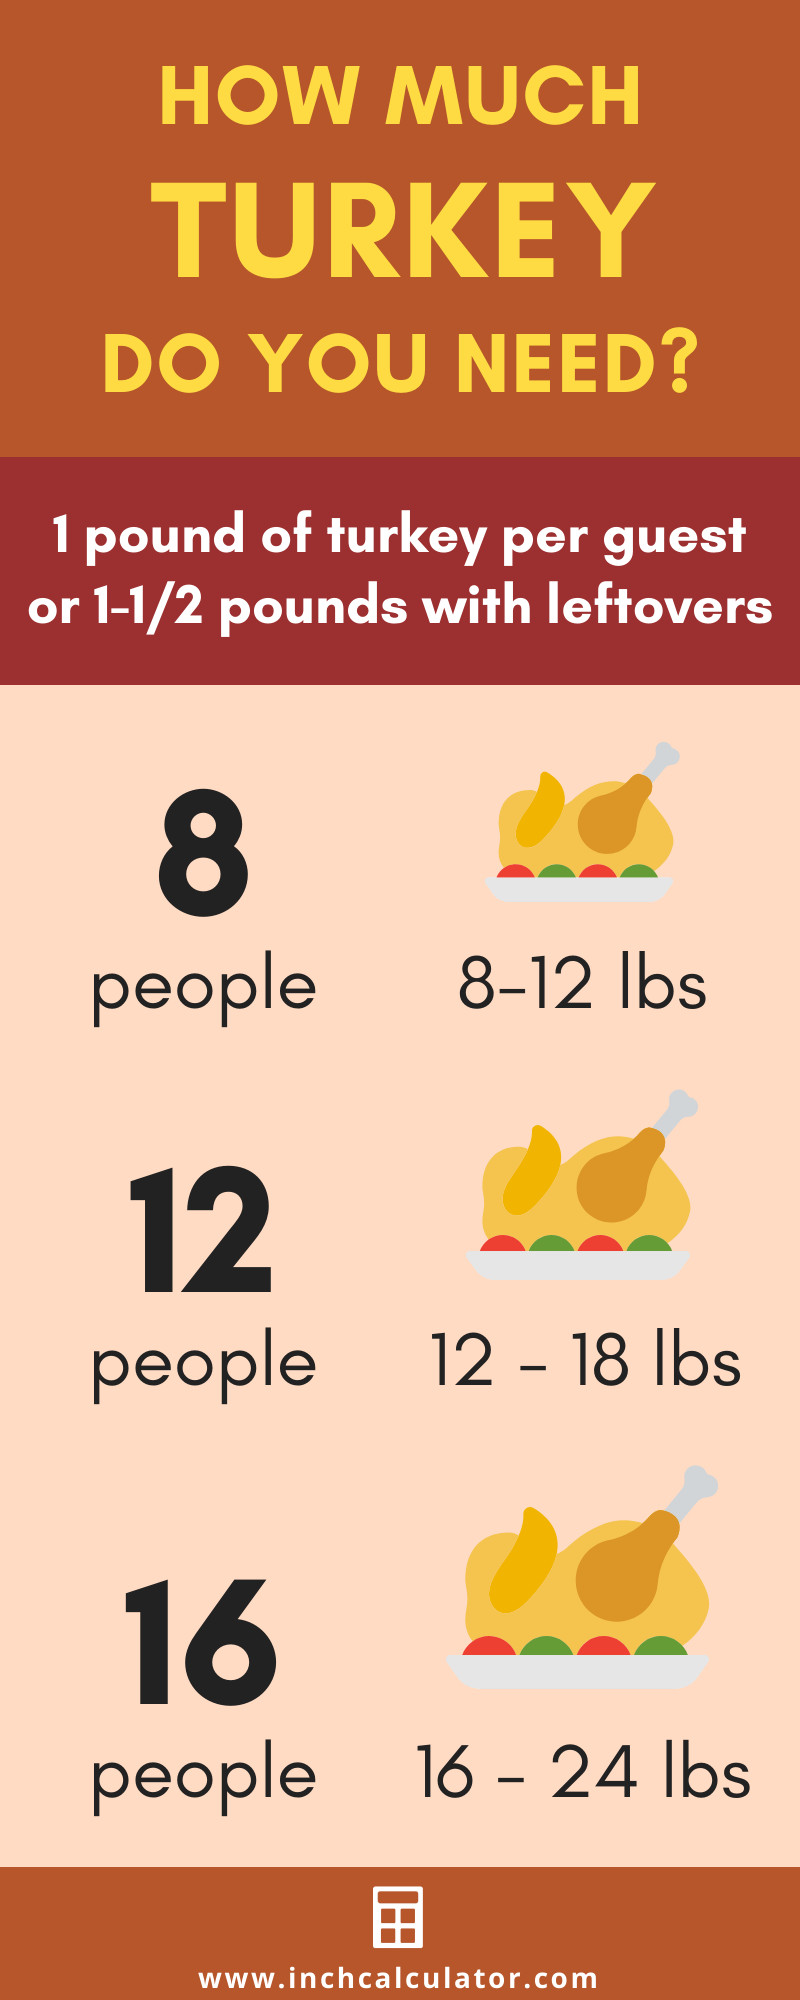 Thanksgiving Food Calculator
 Turkey Size Calculator How Much Turkey do you Need